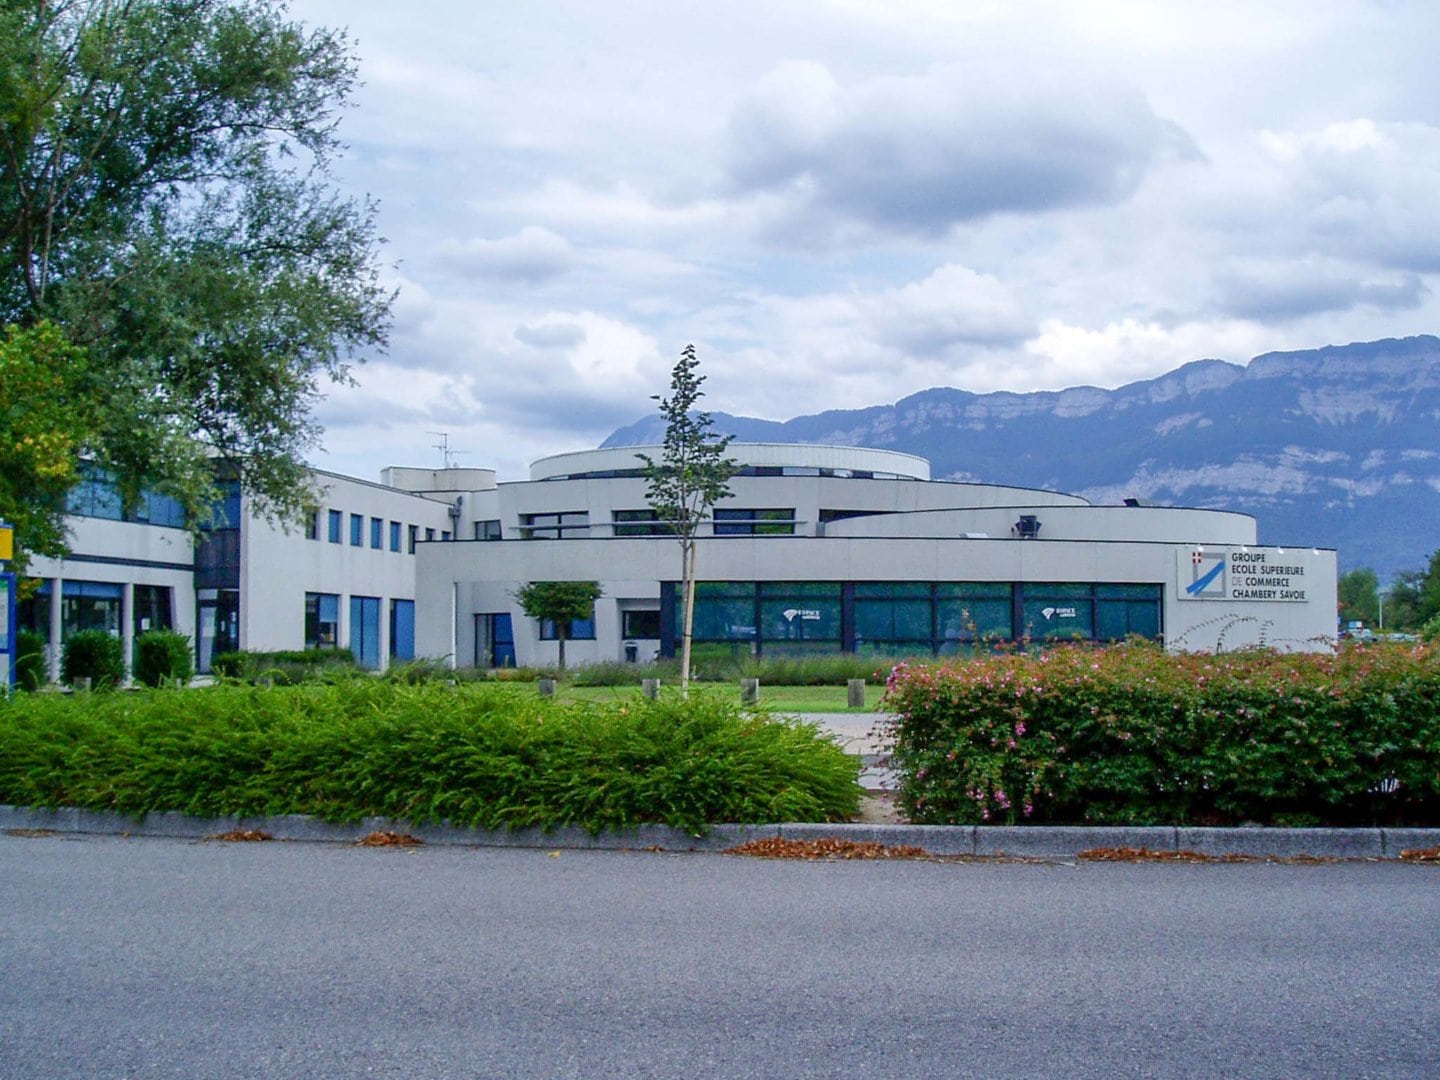 Picture of Ecole Superieure de Commerce school against the backdrop of the Alps.